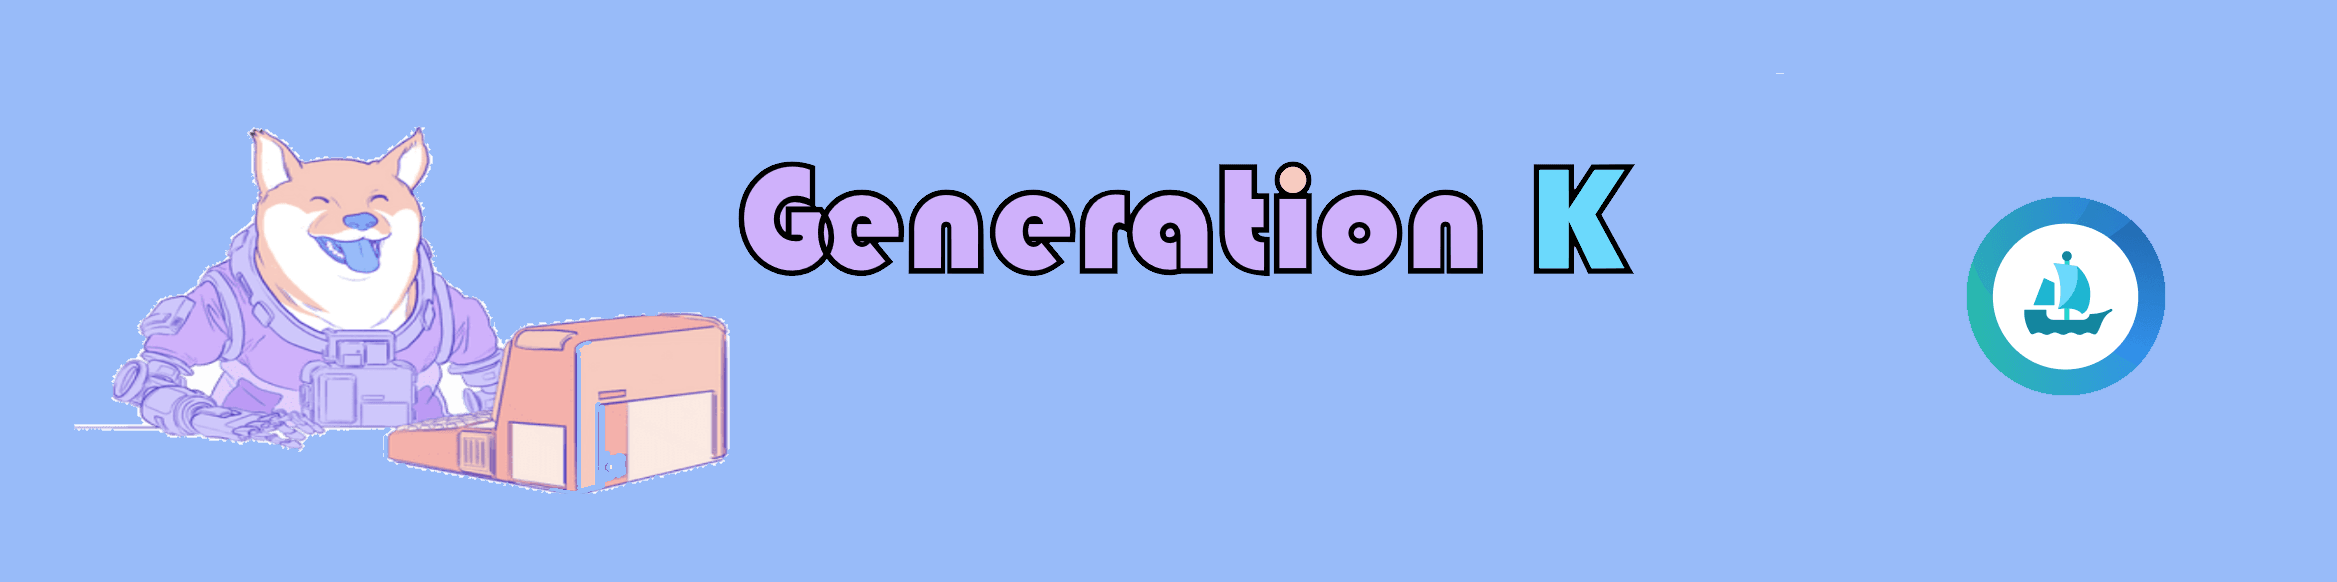 Generation_K 横幅